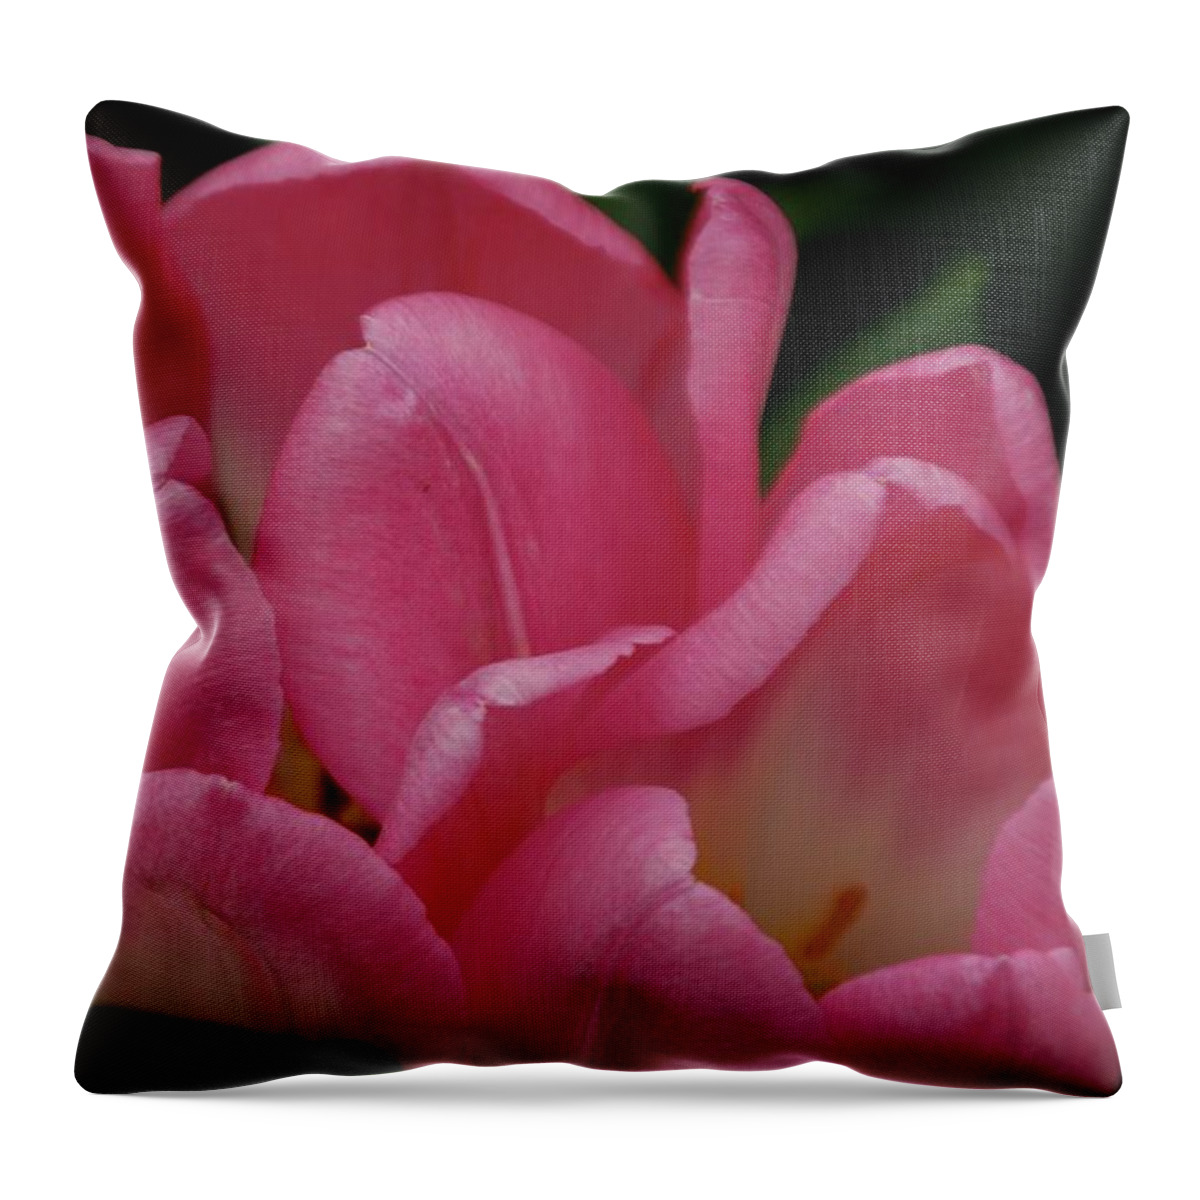 Pink Throw Pillow featuring the photograph Hot Pink Tulip by Adele Aron Greenspun